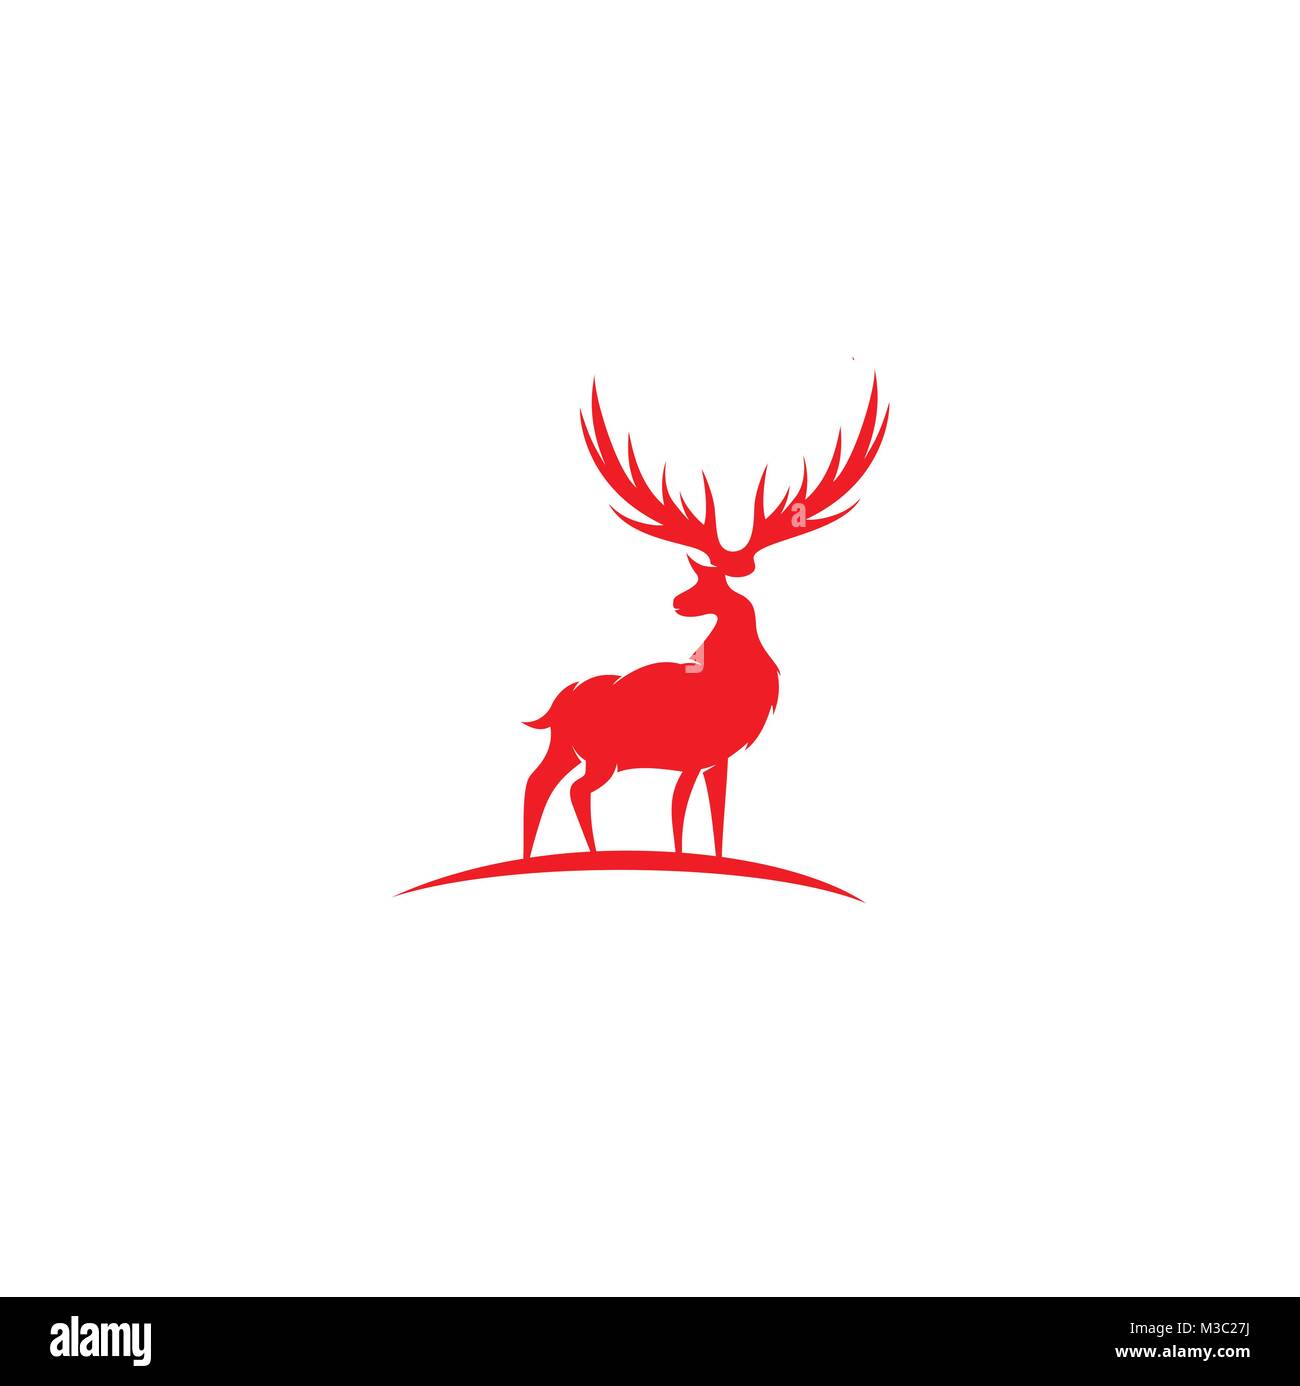 Red deer vctor illustration. Stock Vector